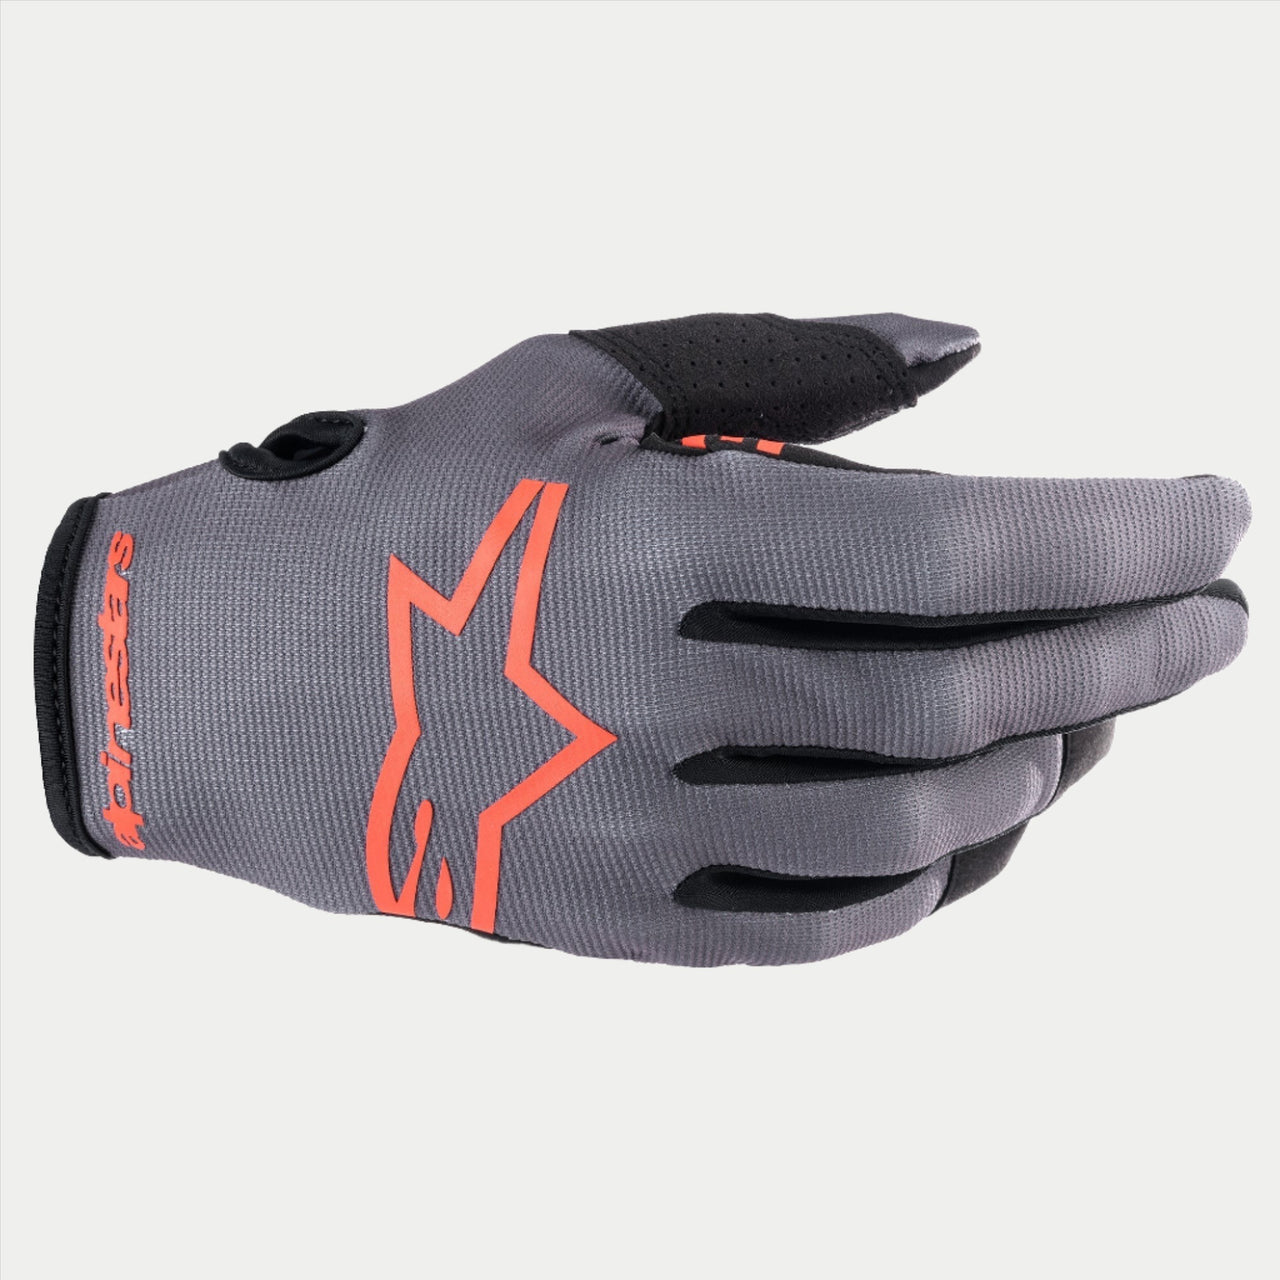 Sale Gloves